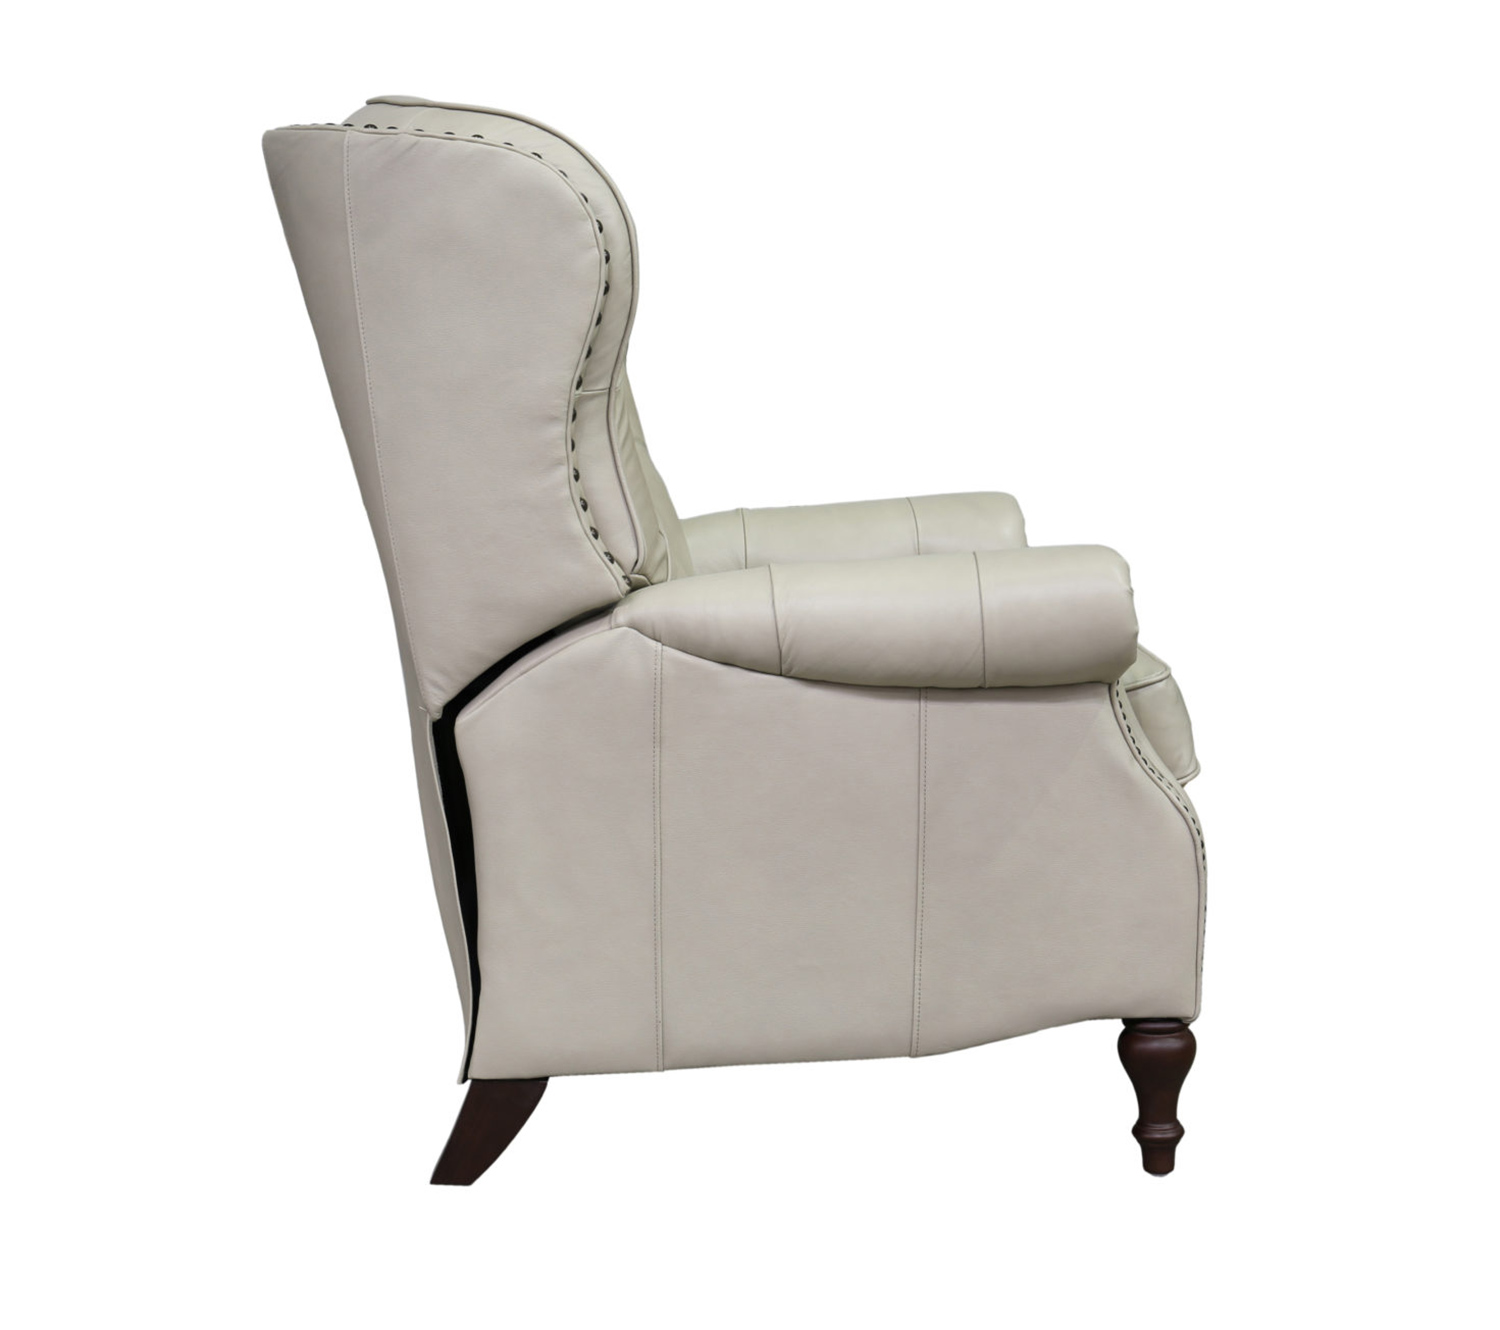 Barcalounger Kendall Recliner Chair - Shoreham Cream/all leather